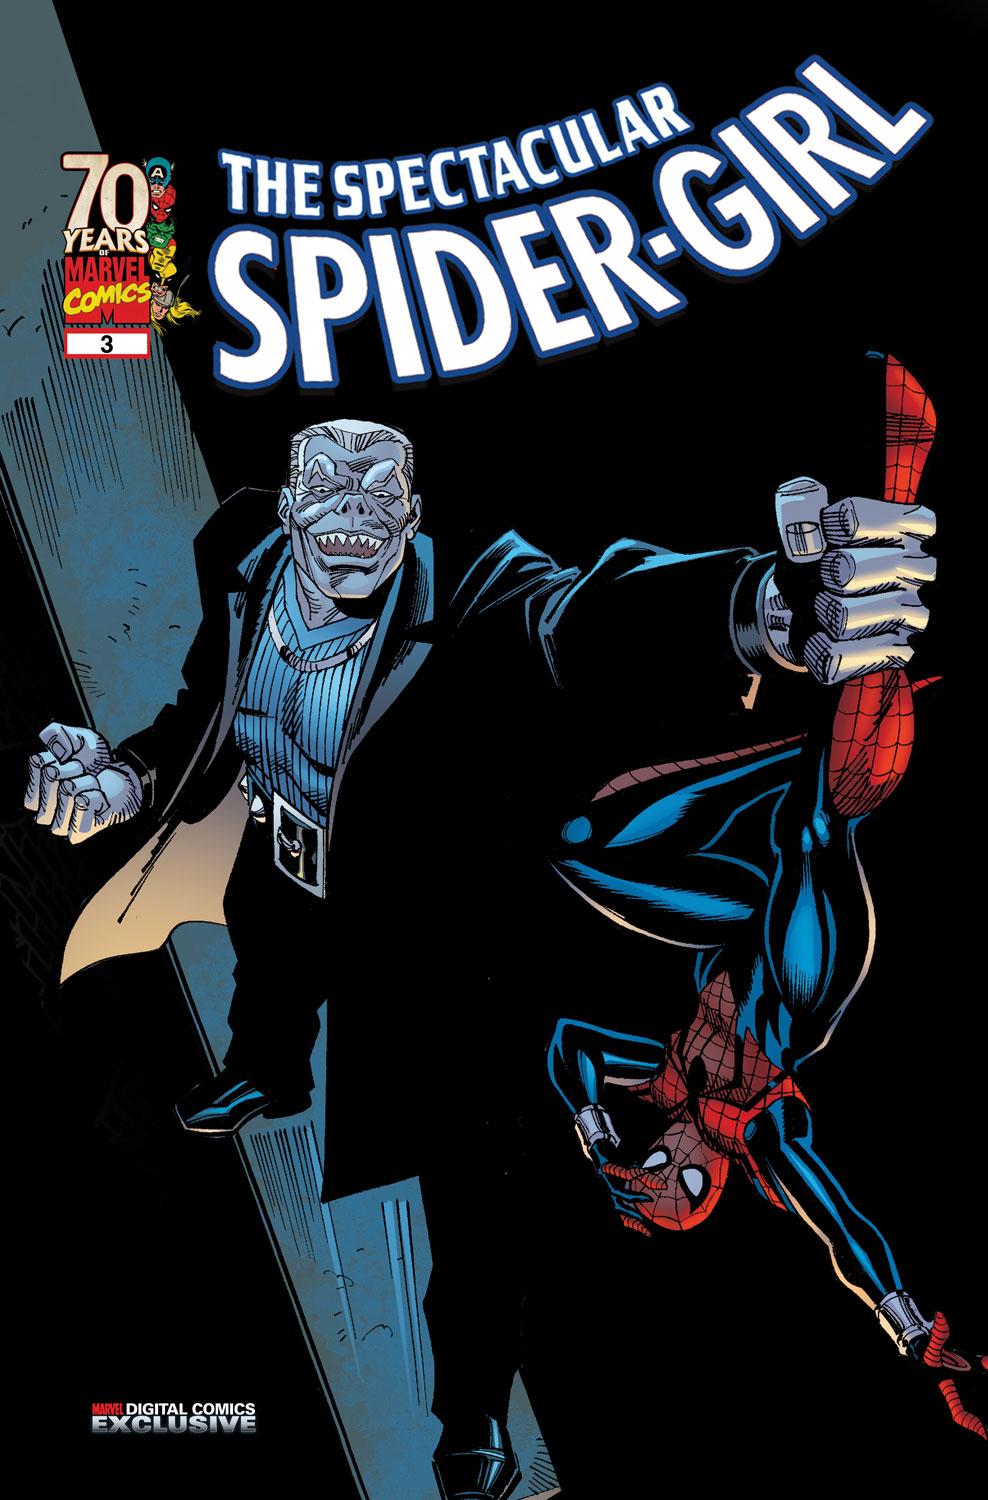 Spectacular Spider-Girl Digital Comic (2009) #3